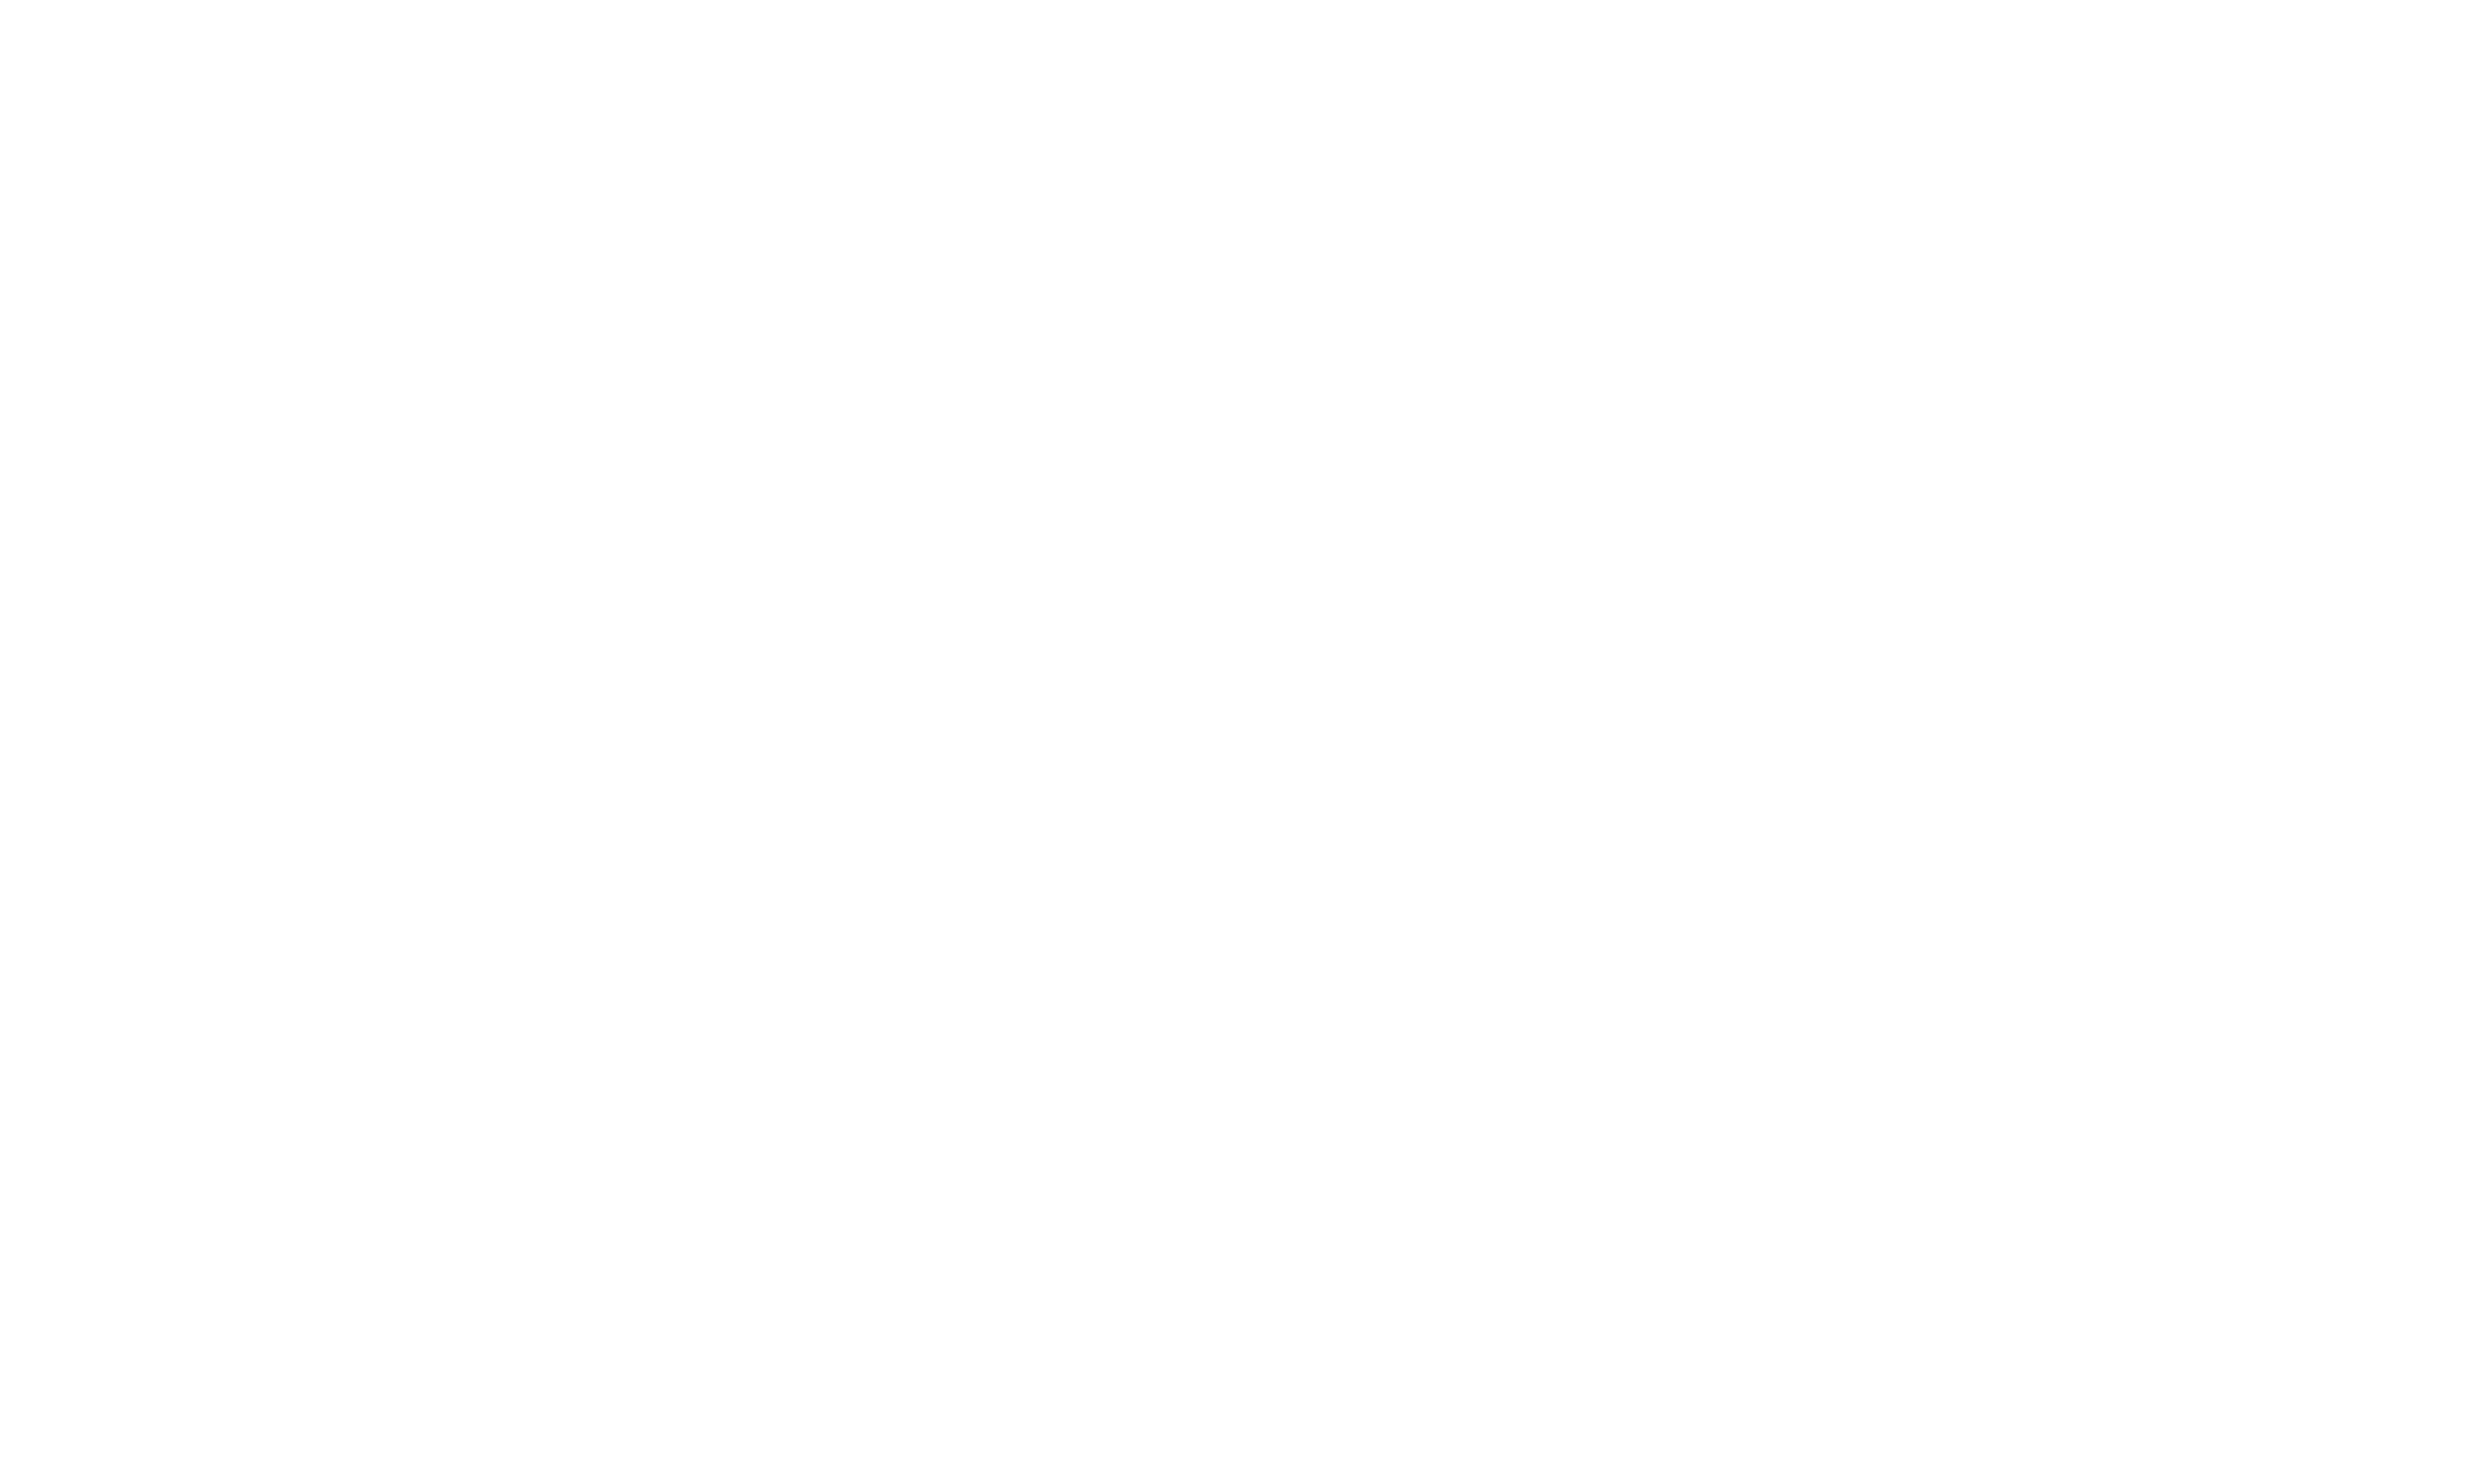 Striveworks